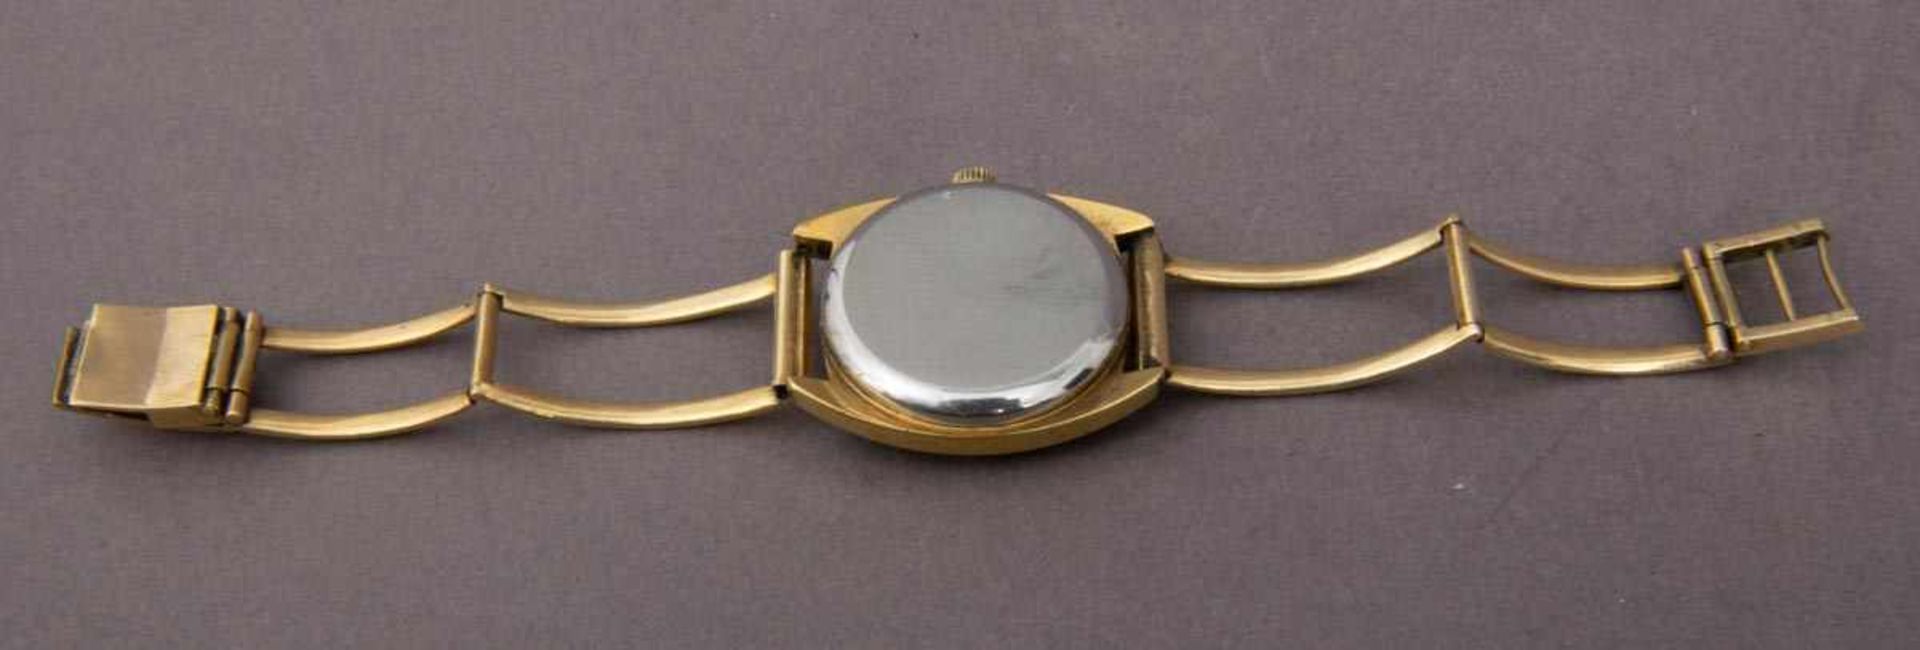 Omega De Ville Herrenarmbanduhr mit 585er Gelbgold-Armband (ca. 20 gr). Handaufzug mit - Bild 5 aus 7